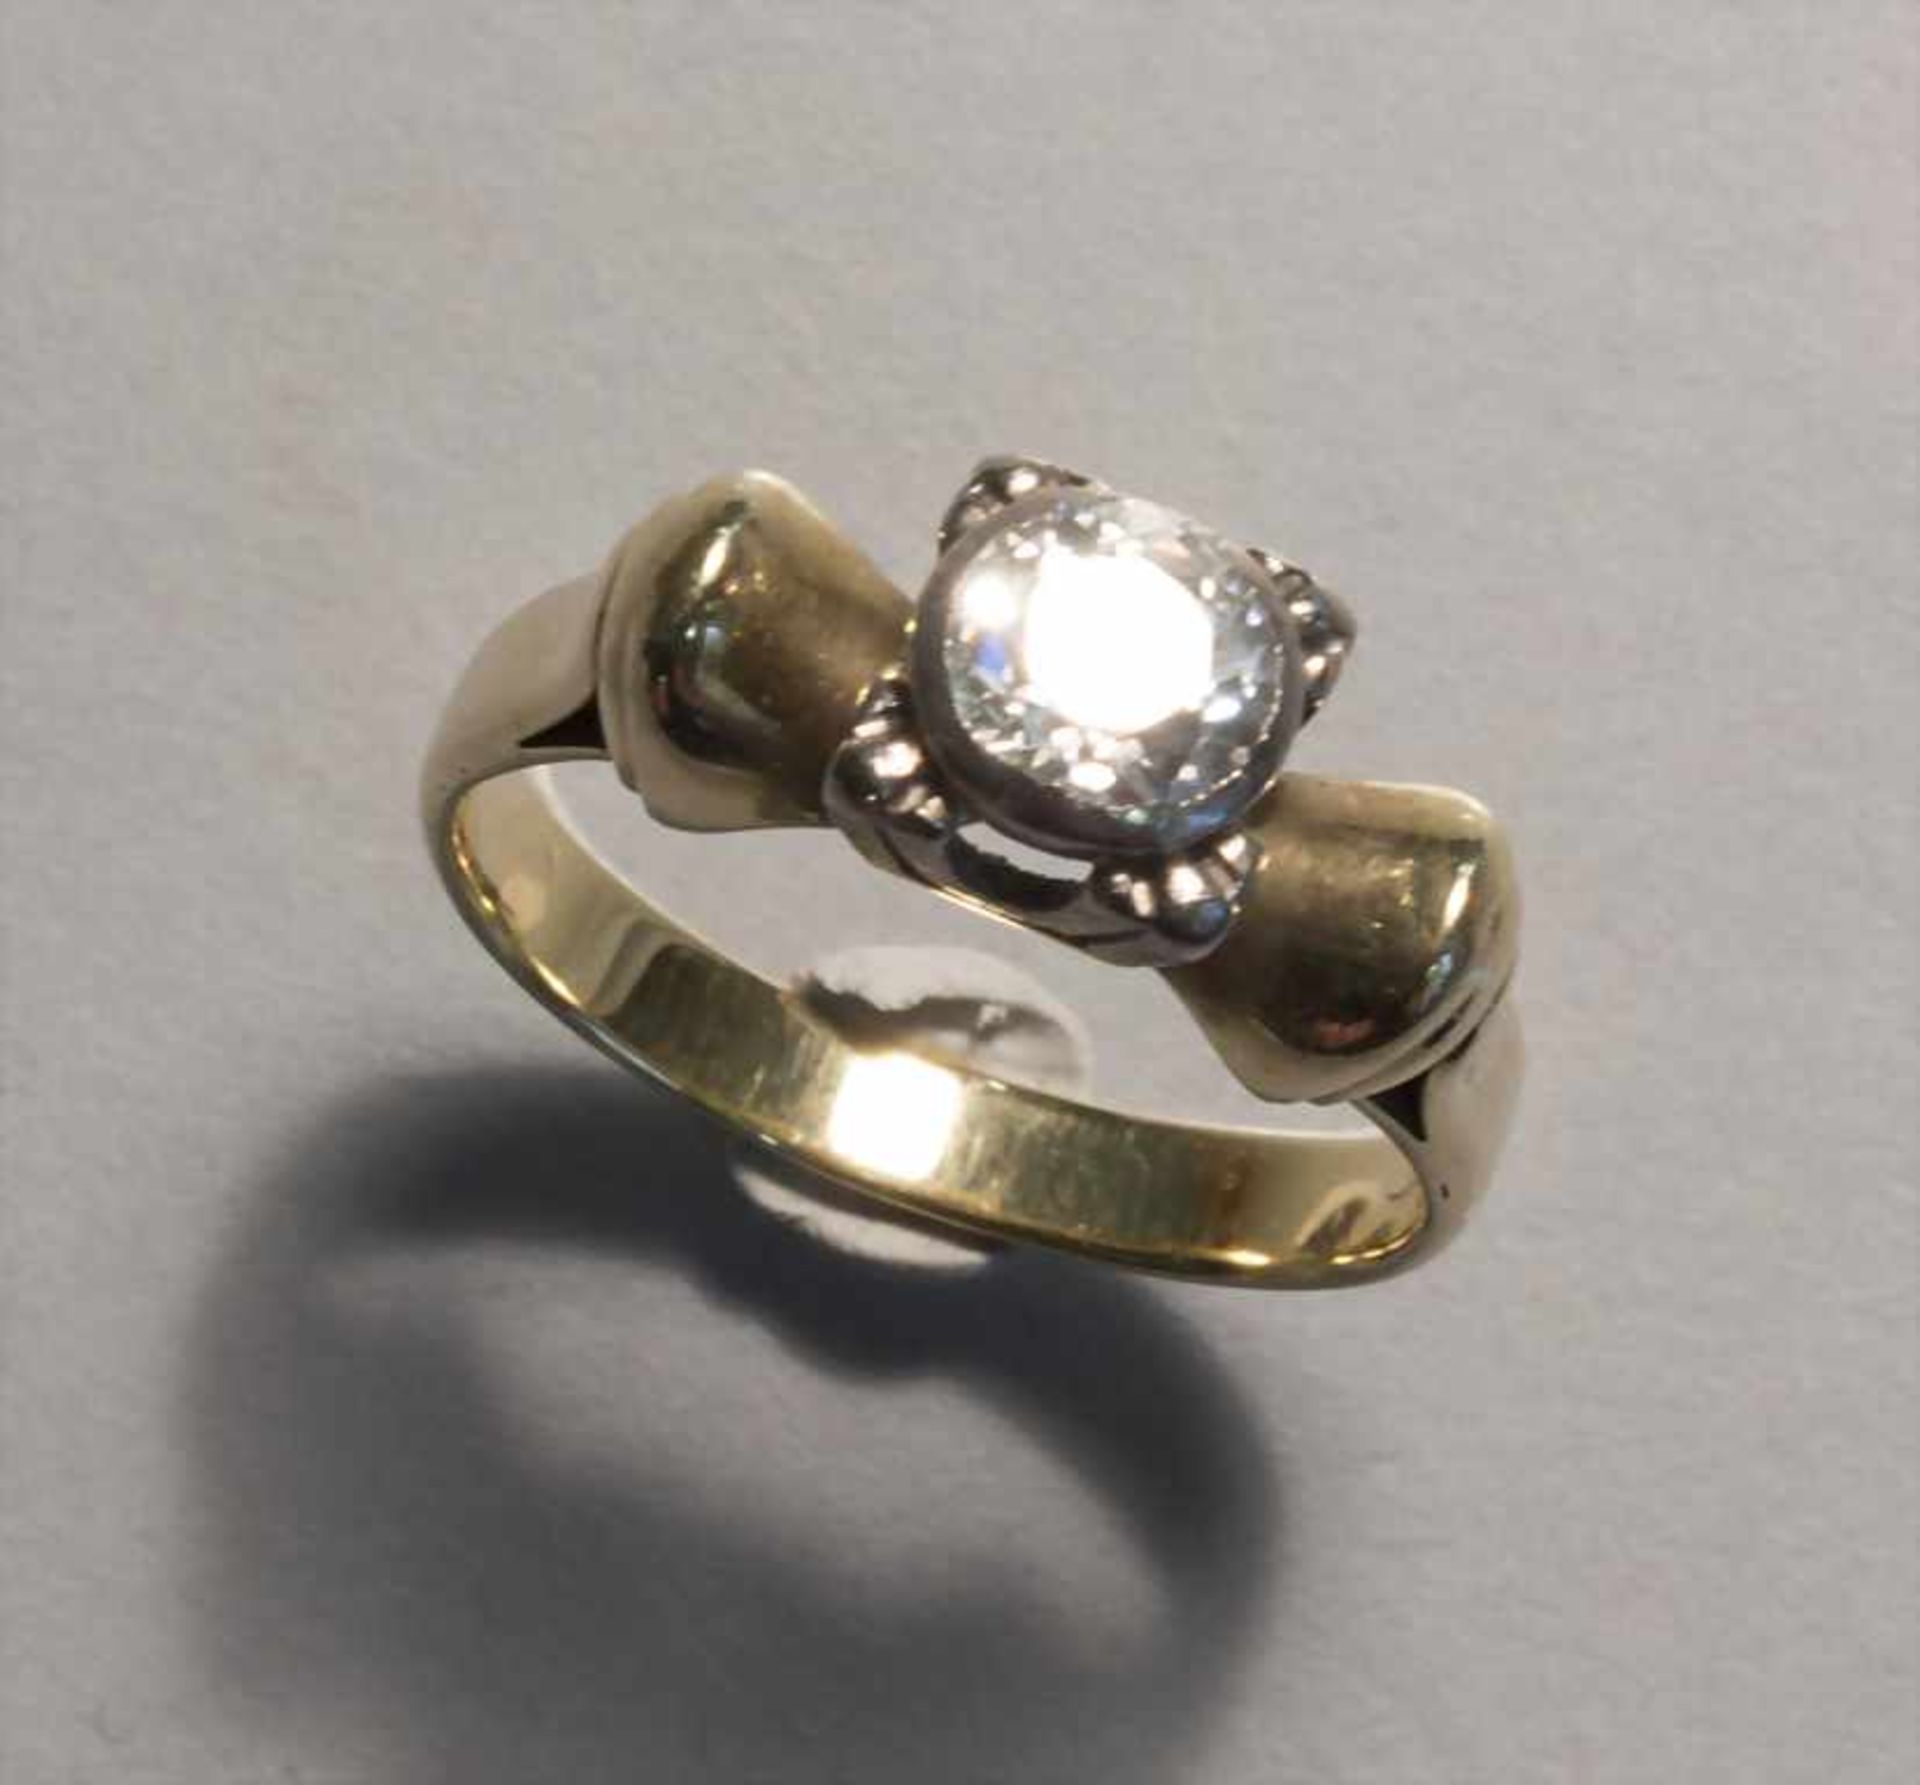 Damenring mit Altschliff Diamant / A ladies ring with diamond - Image 2 of 3